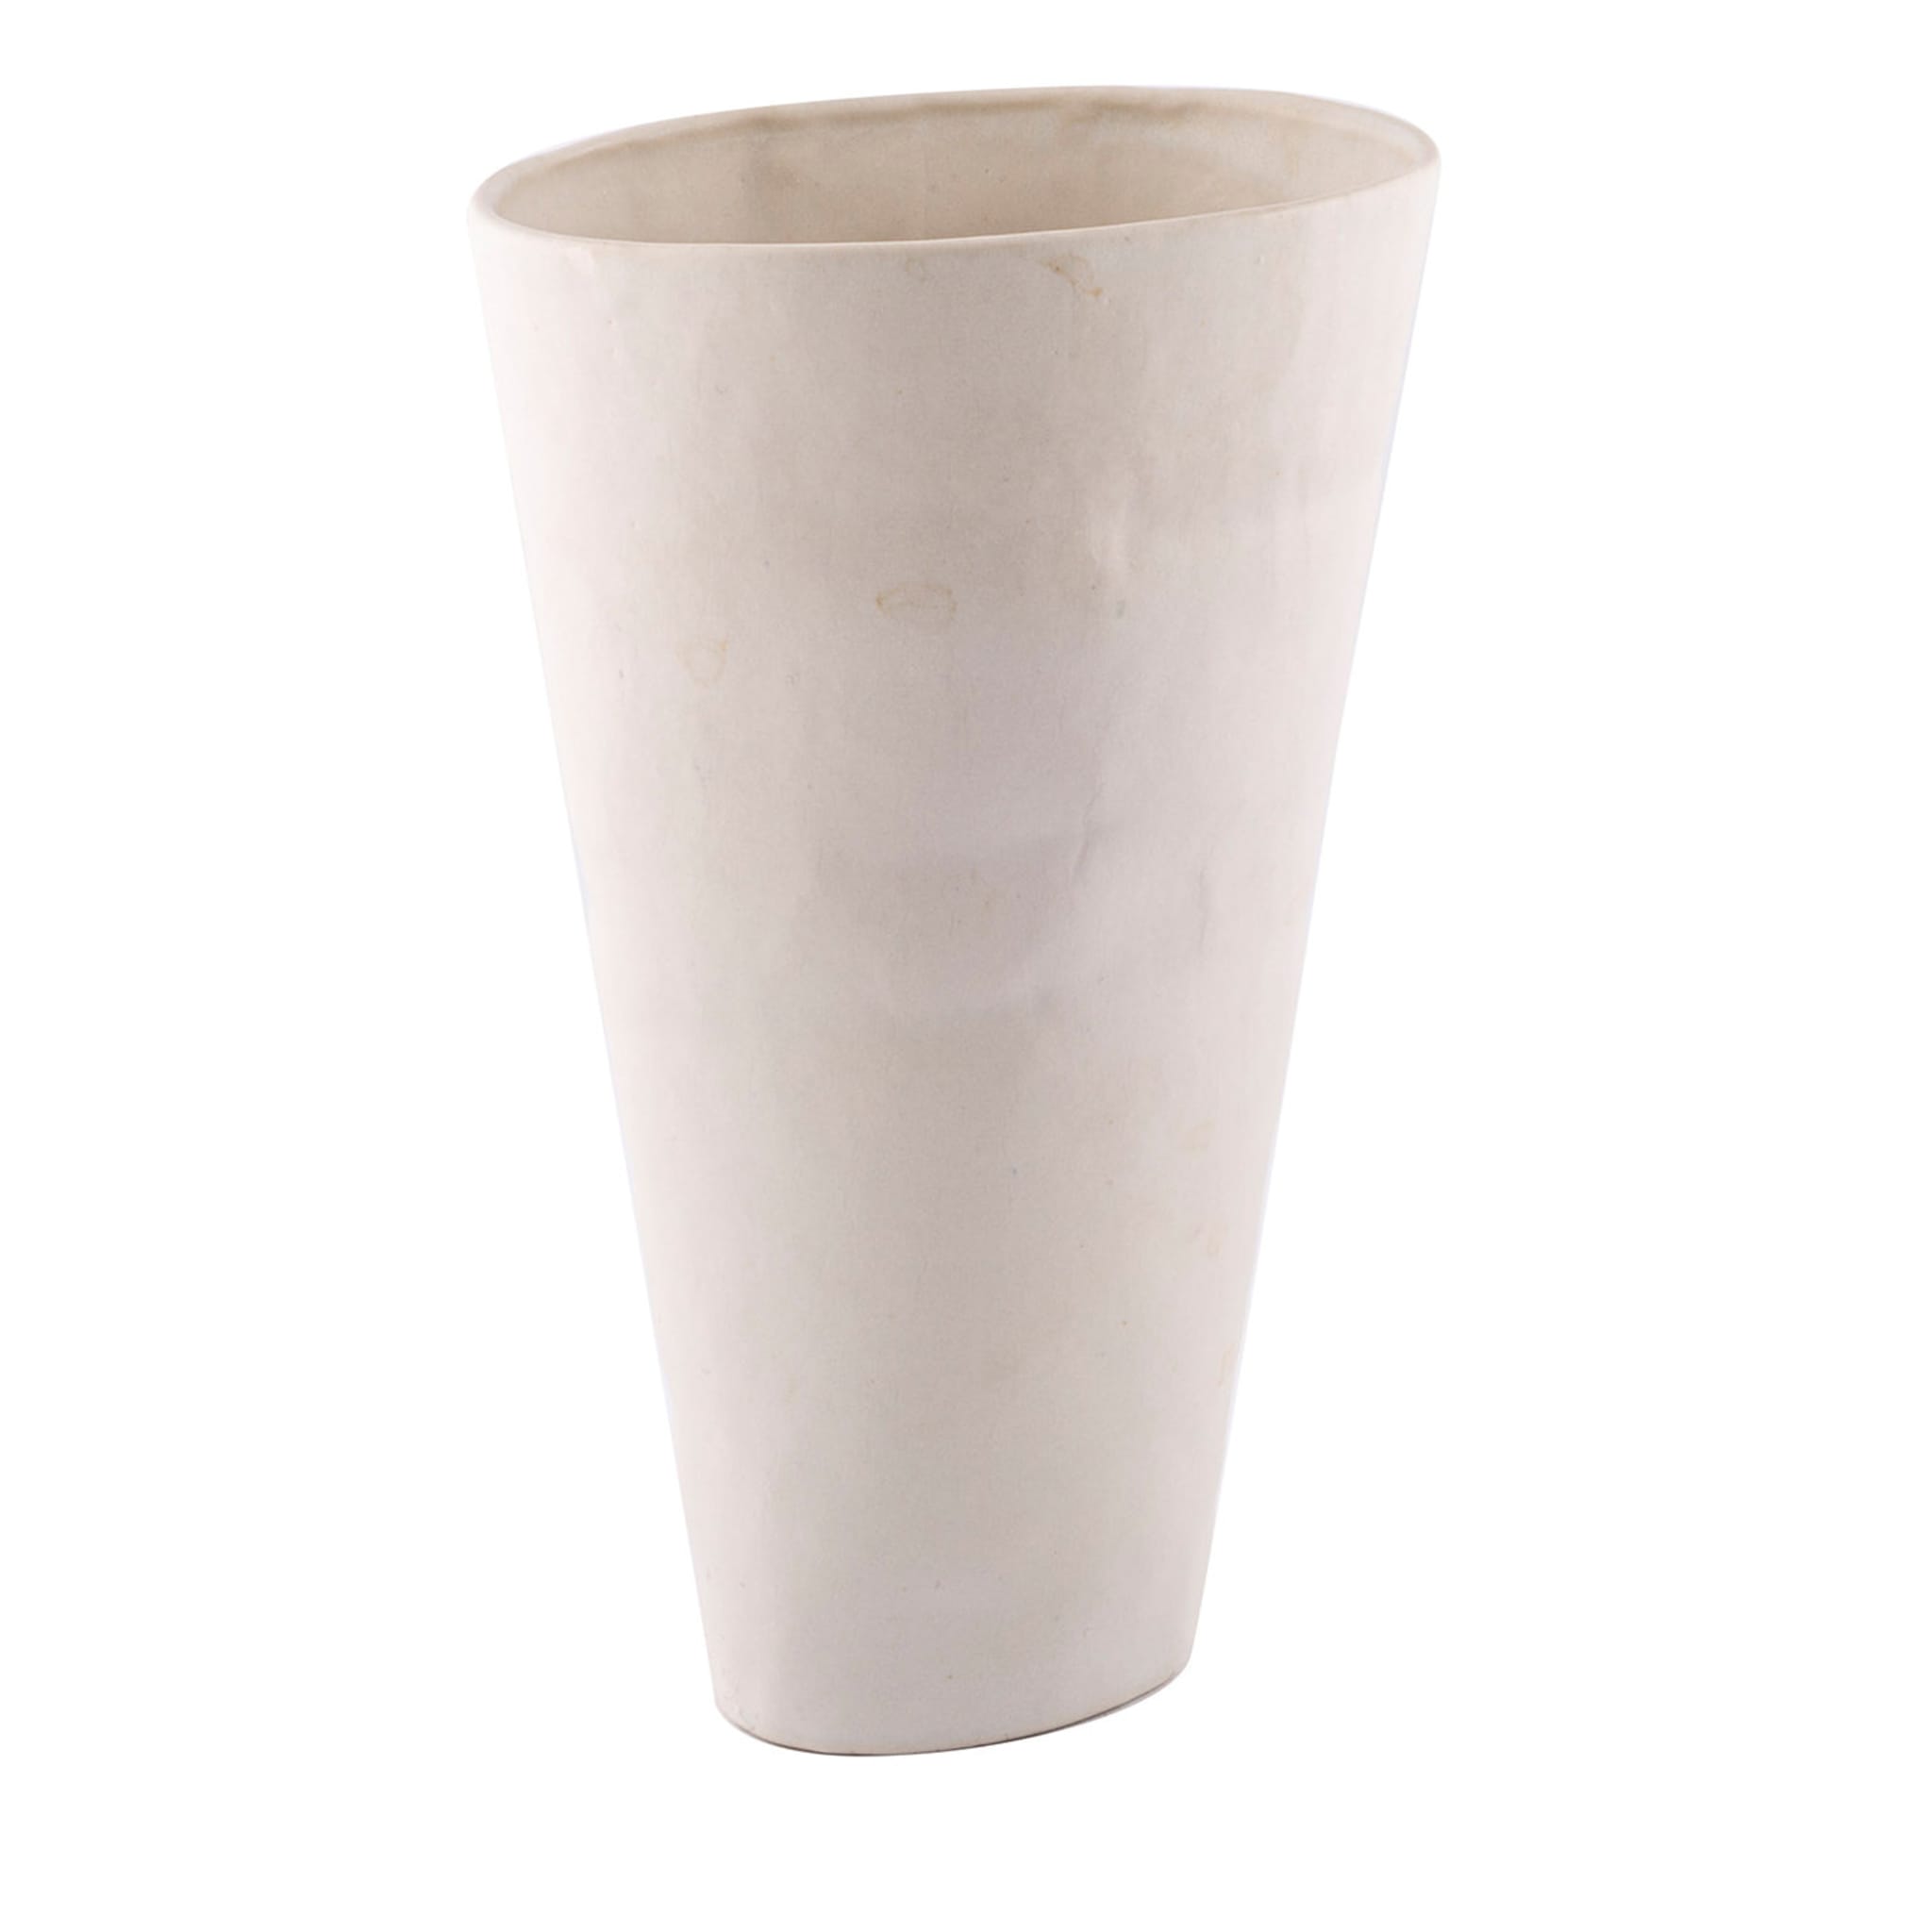 White Porcelain Vase #2 - Main view